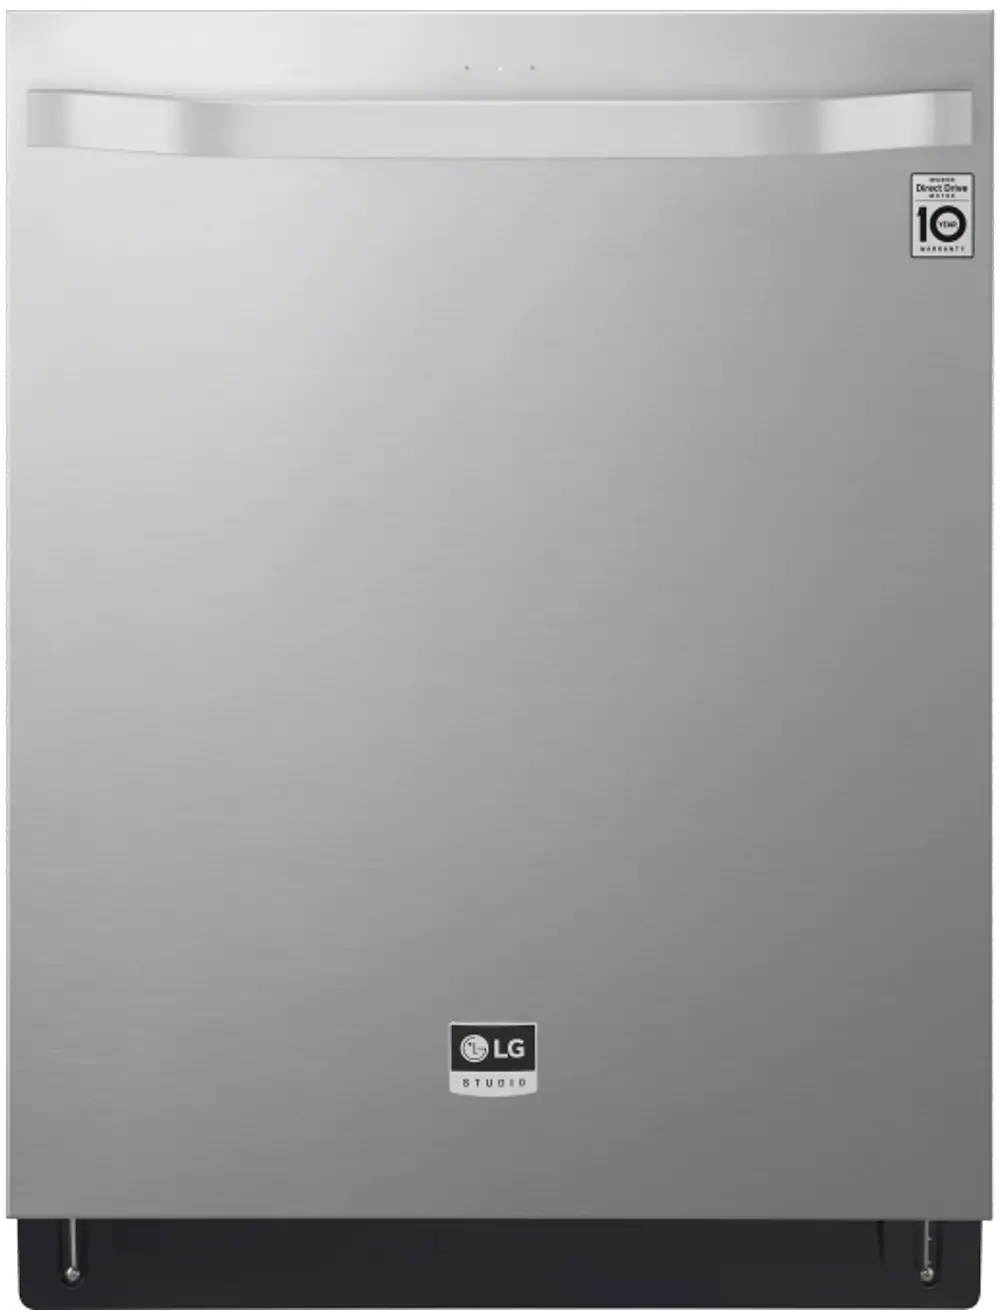 LSDT9908ST LG Studio Dishwasher - Stainless Steel-1